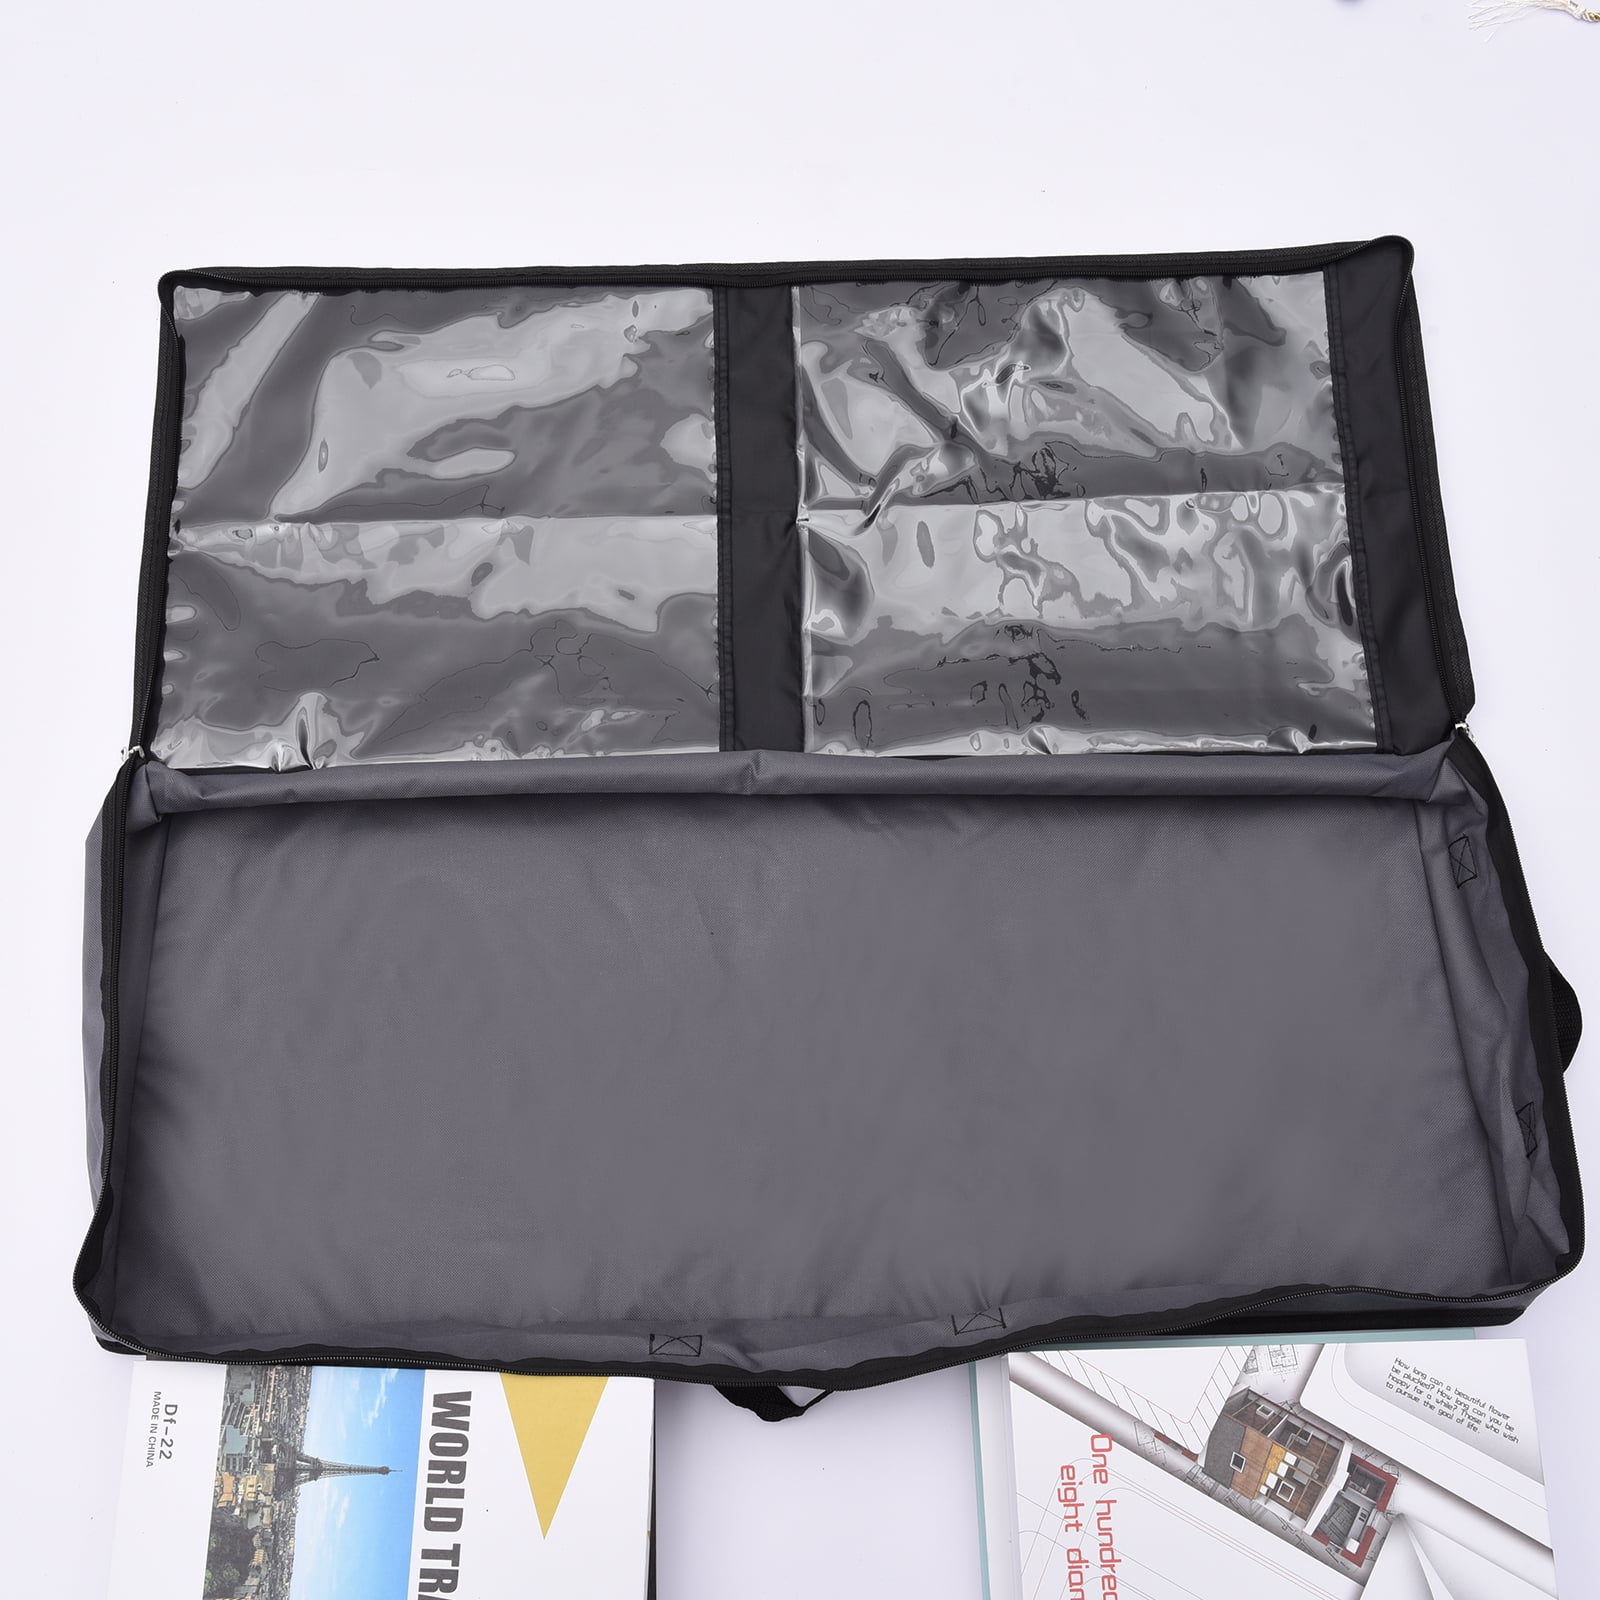 Mrrihand 600D Heavy Duty Wrapping Paper Storage Bag 82x13x34cm